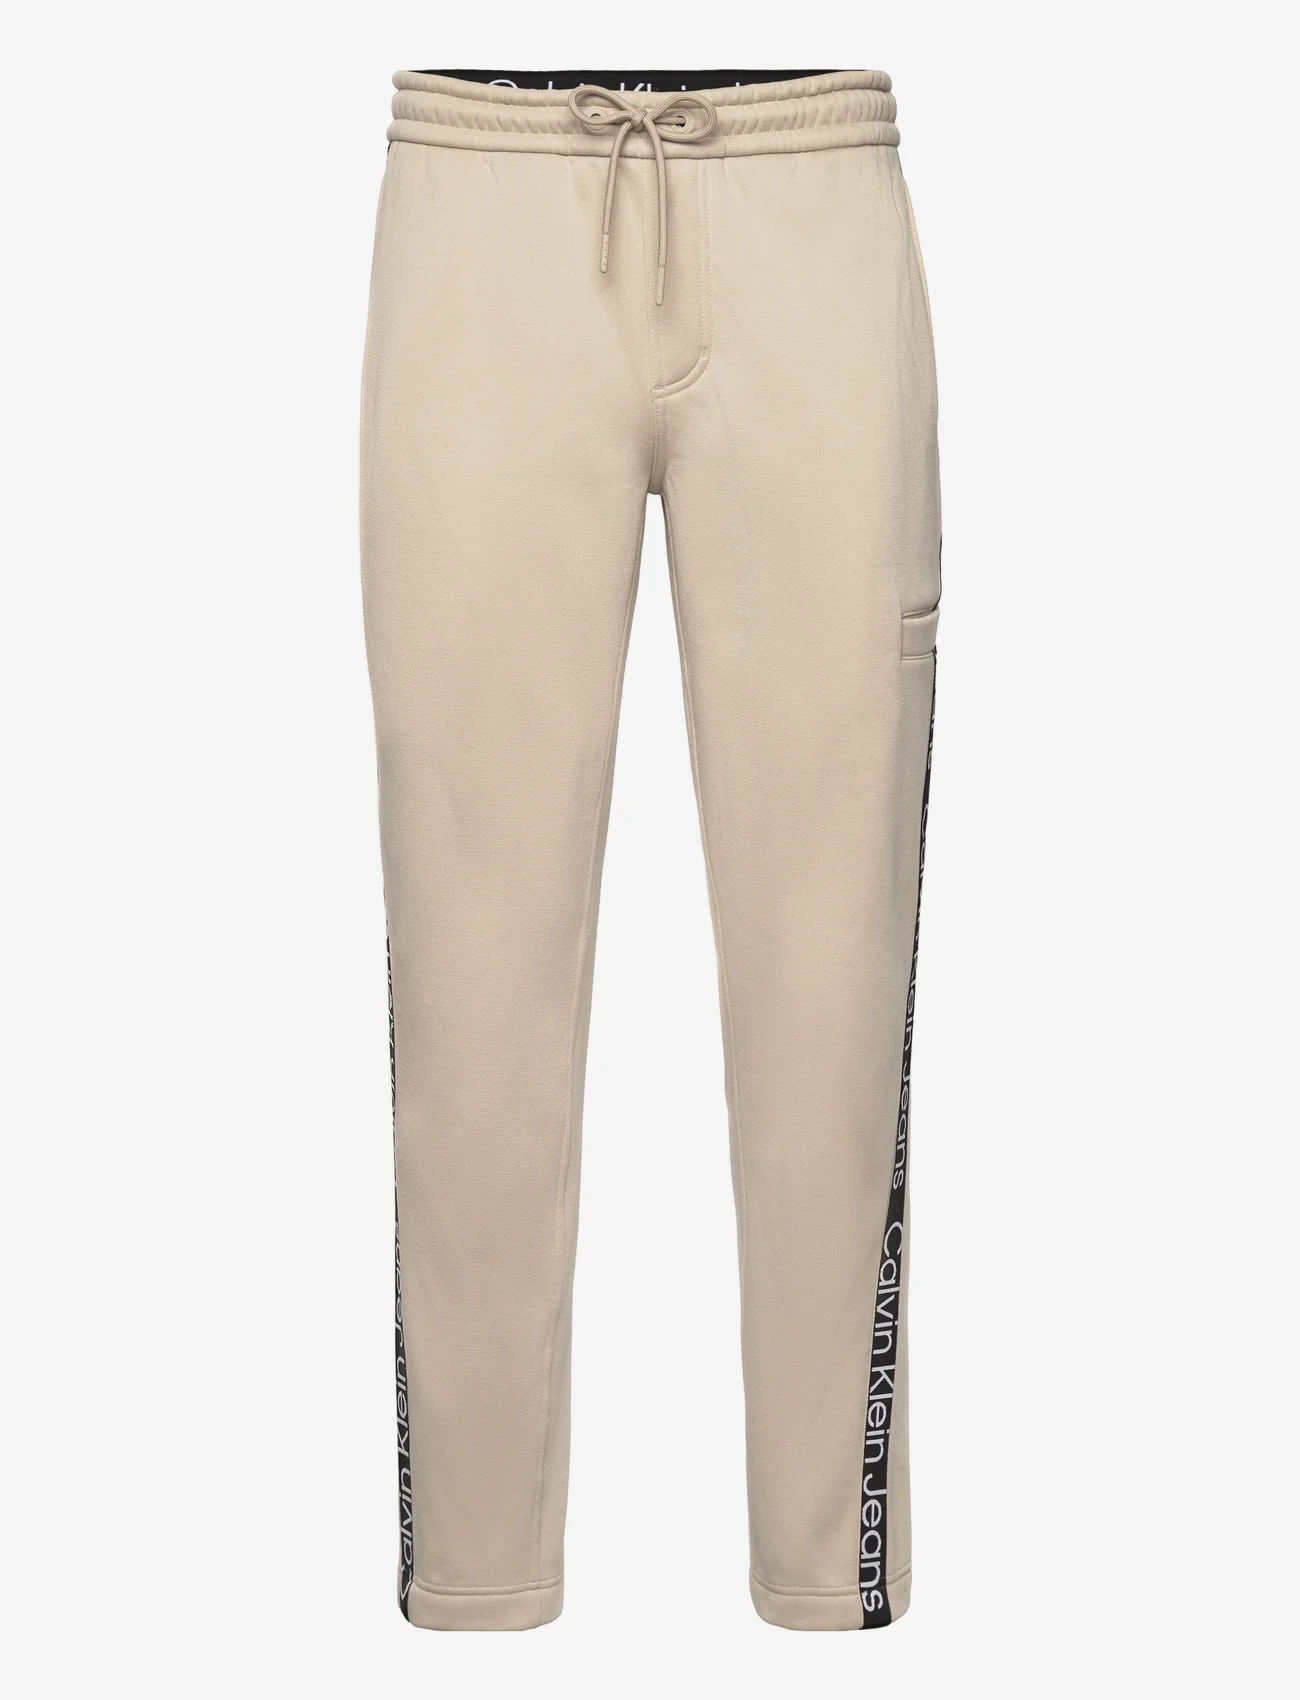 Calvin Klein Jeans - CUT OFF LOGO TAPE HWK PANT - joggingbroek - plaza taupe - 0